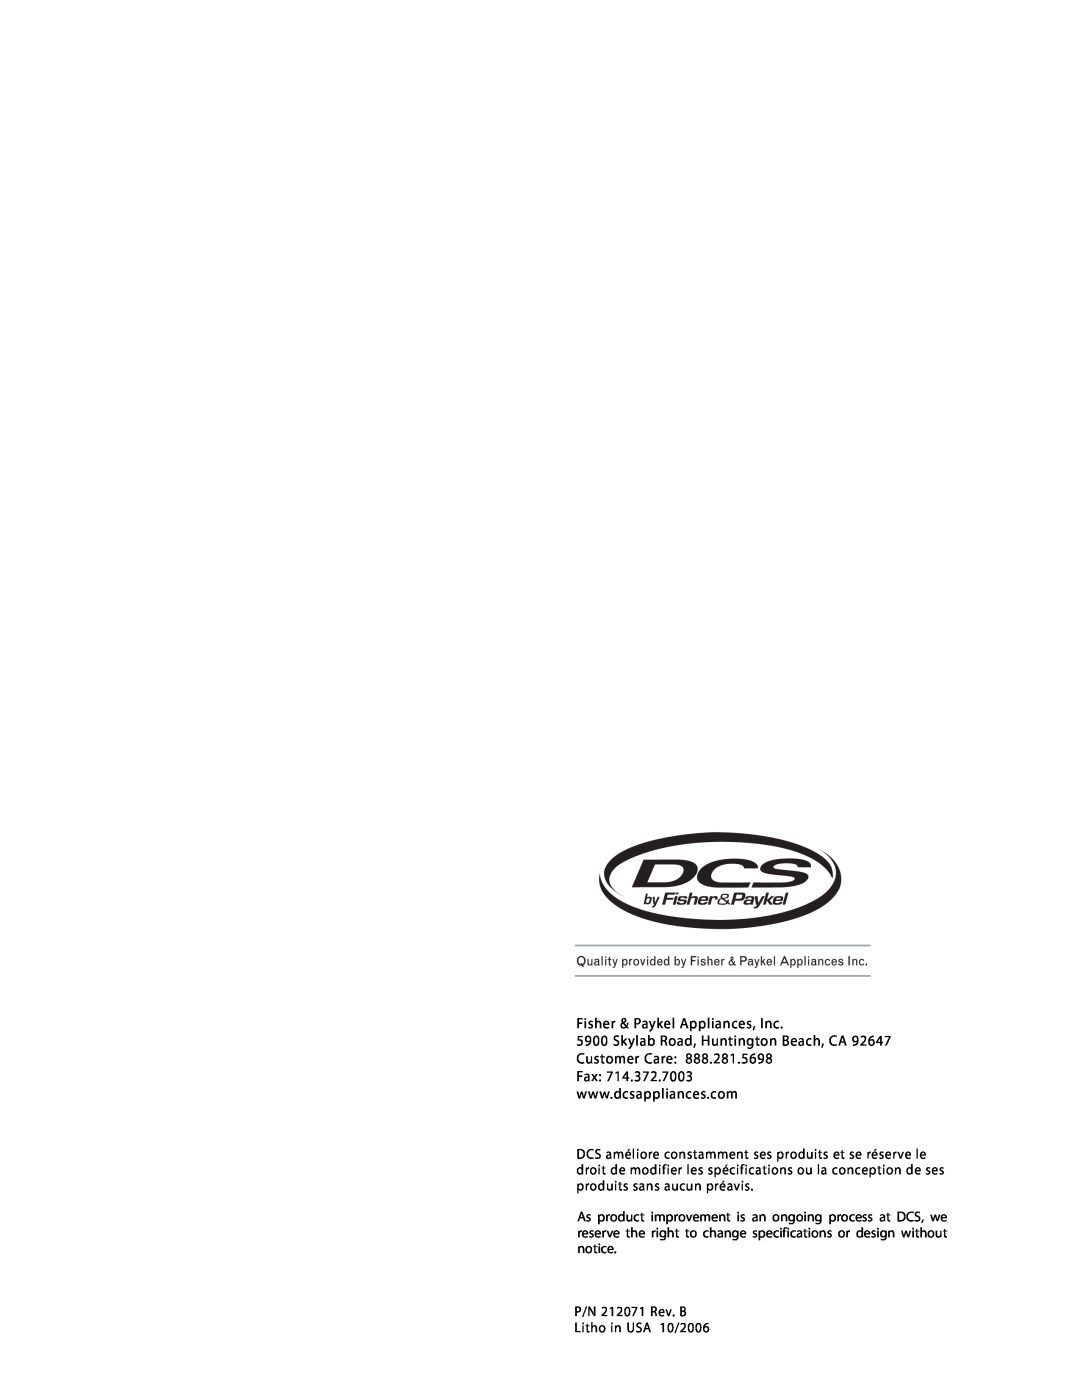 DCS BGC-3048, BGC-1236, BGC-3036, BGC-1248 manual Fisher & Paykel Appliances, Inc, P/N 212071 Rev. B Litho in USA 10/2006 